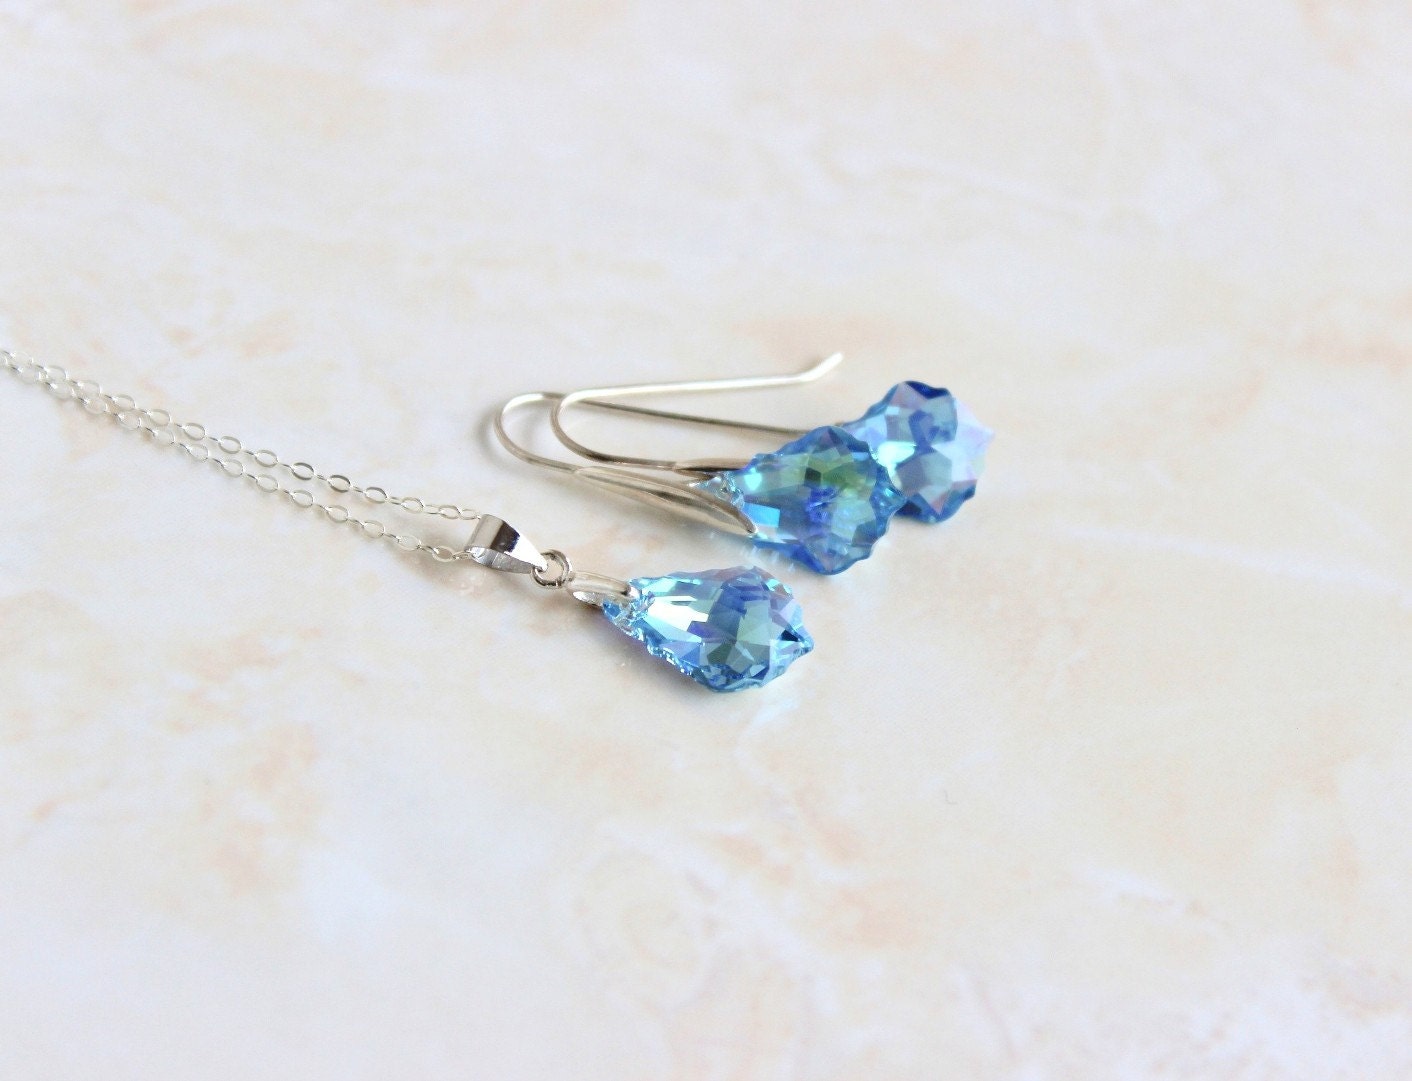 Swarovski Aquamarine Crystal Necklace and Earrings Set